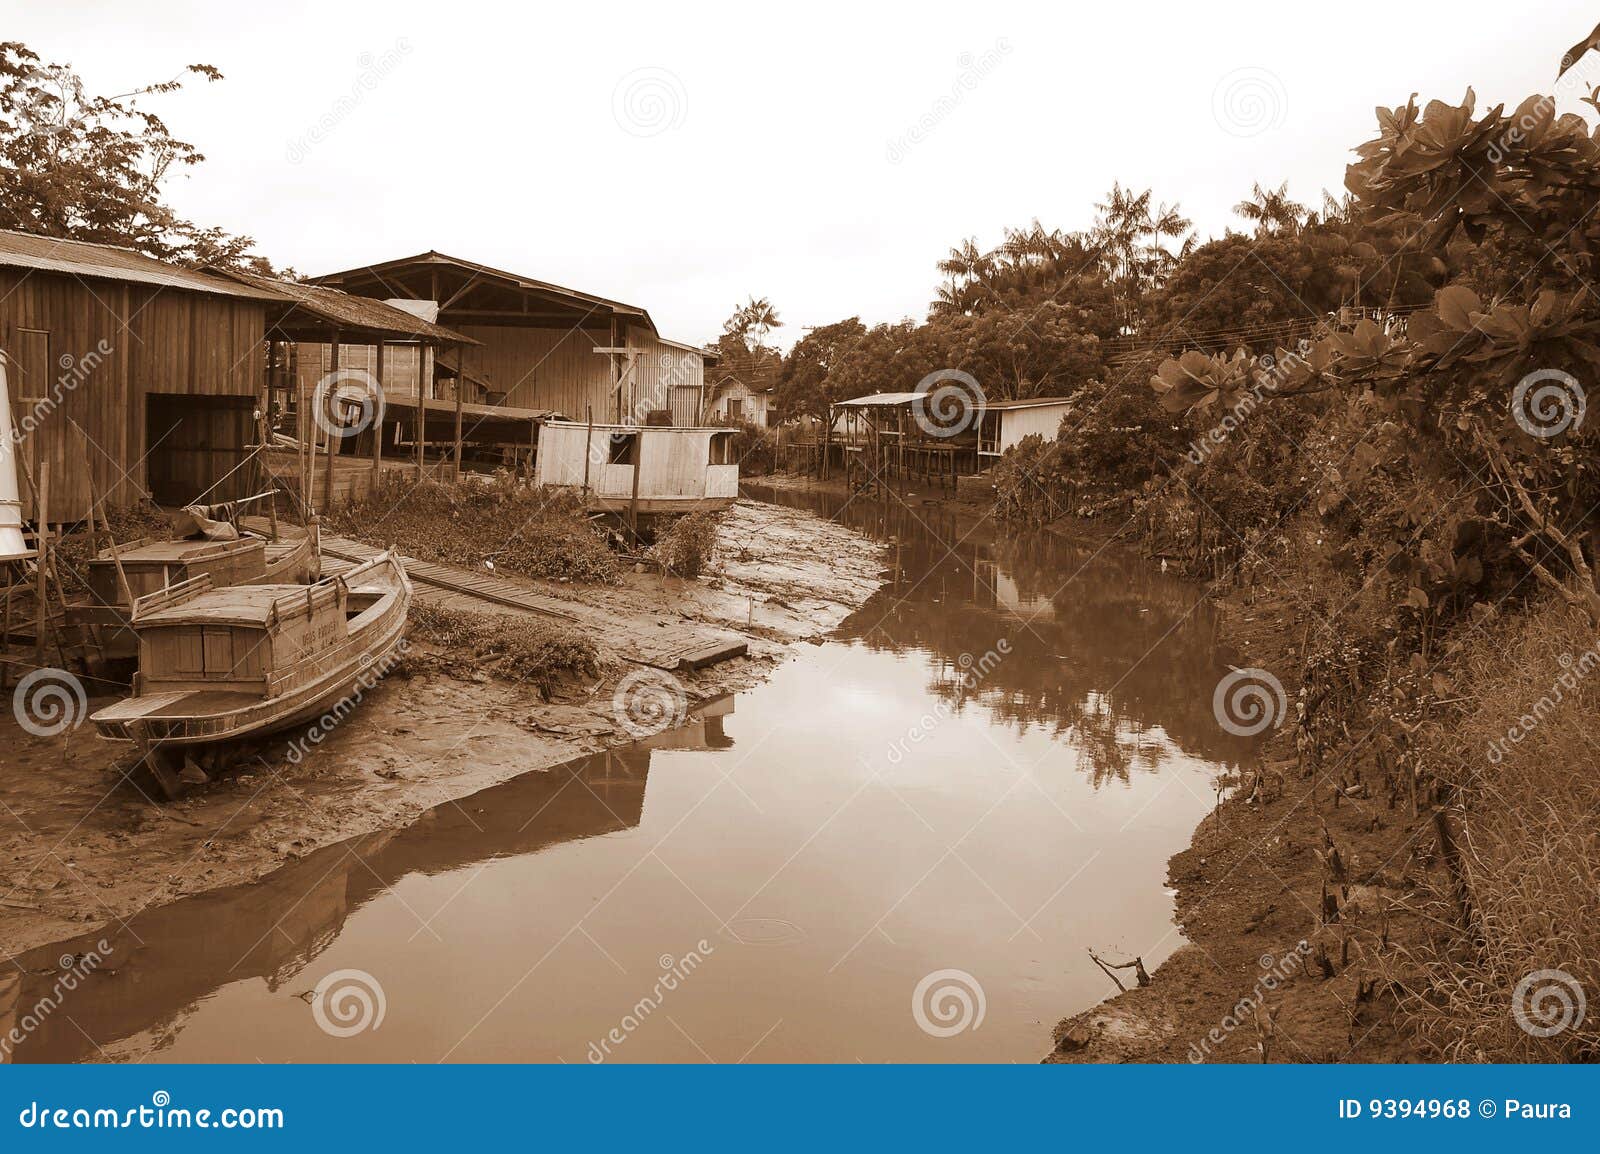 fishermen village in amazon